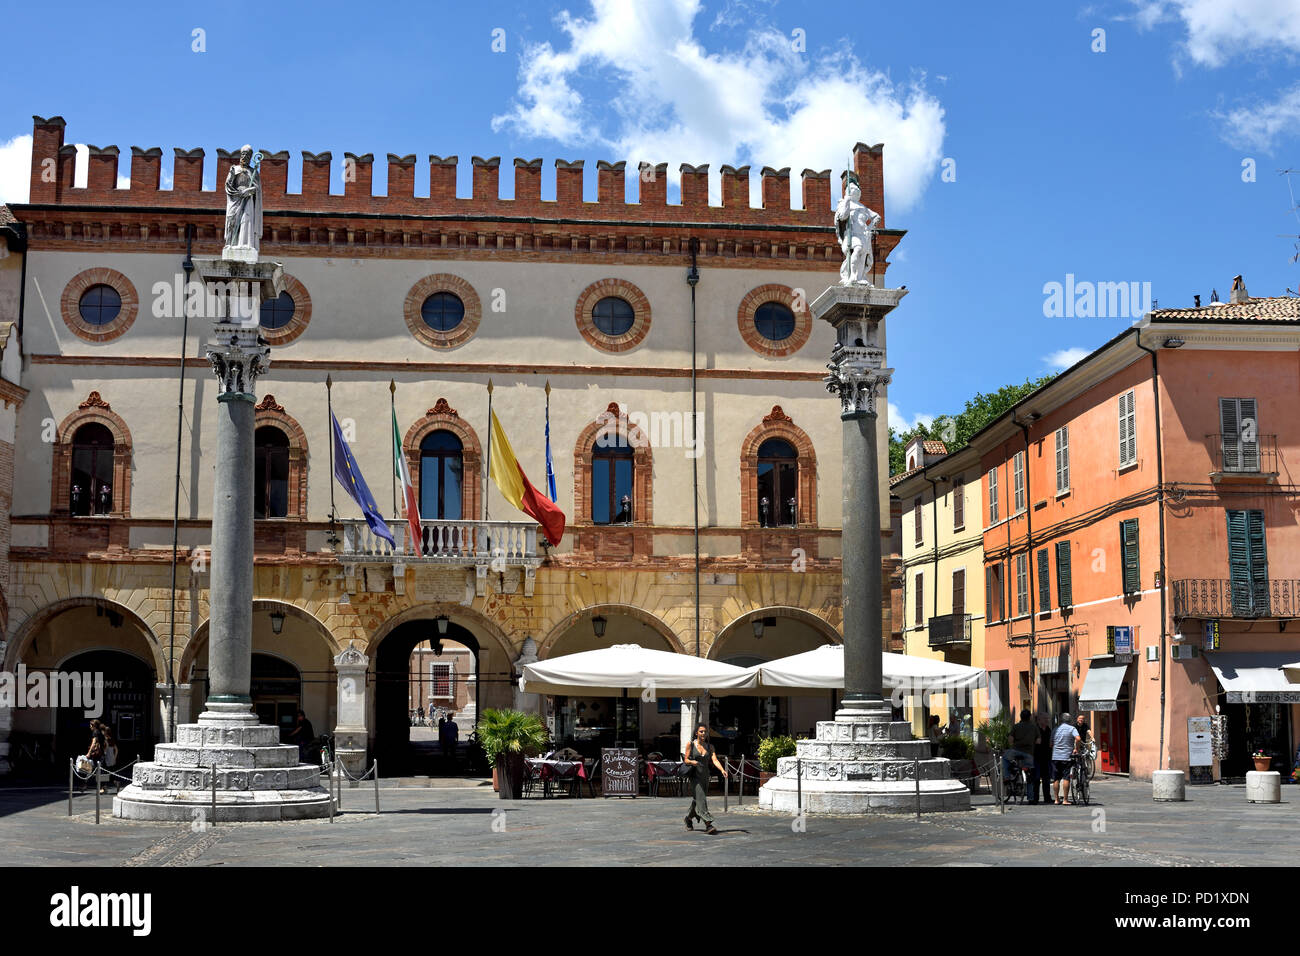 Stadt Piazza del Popolo mit 2 Säulen und Statuen in Ravenna, Italien, Emilia-Romagna, Nordirland, Italien, Stockfoto